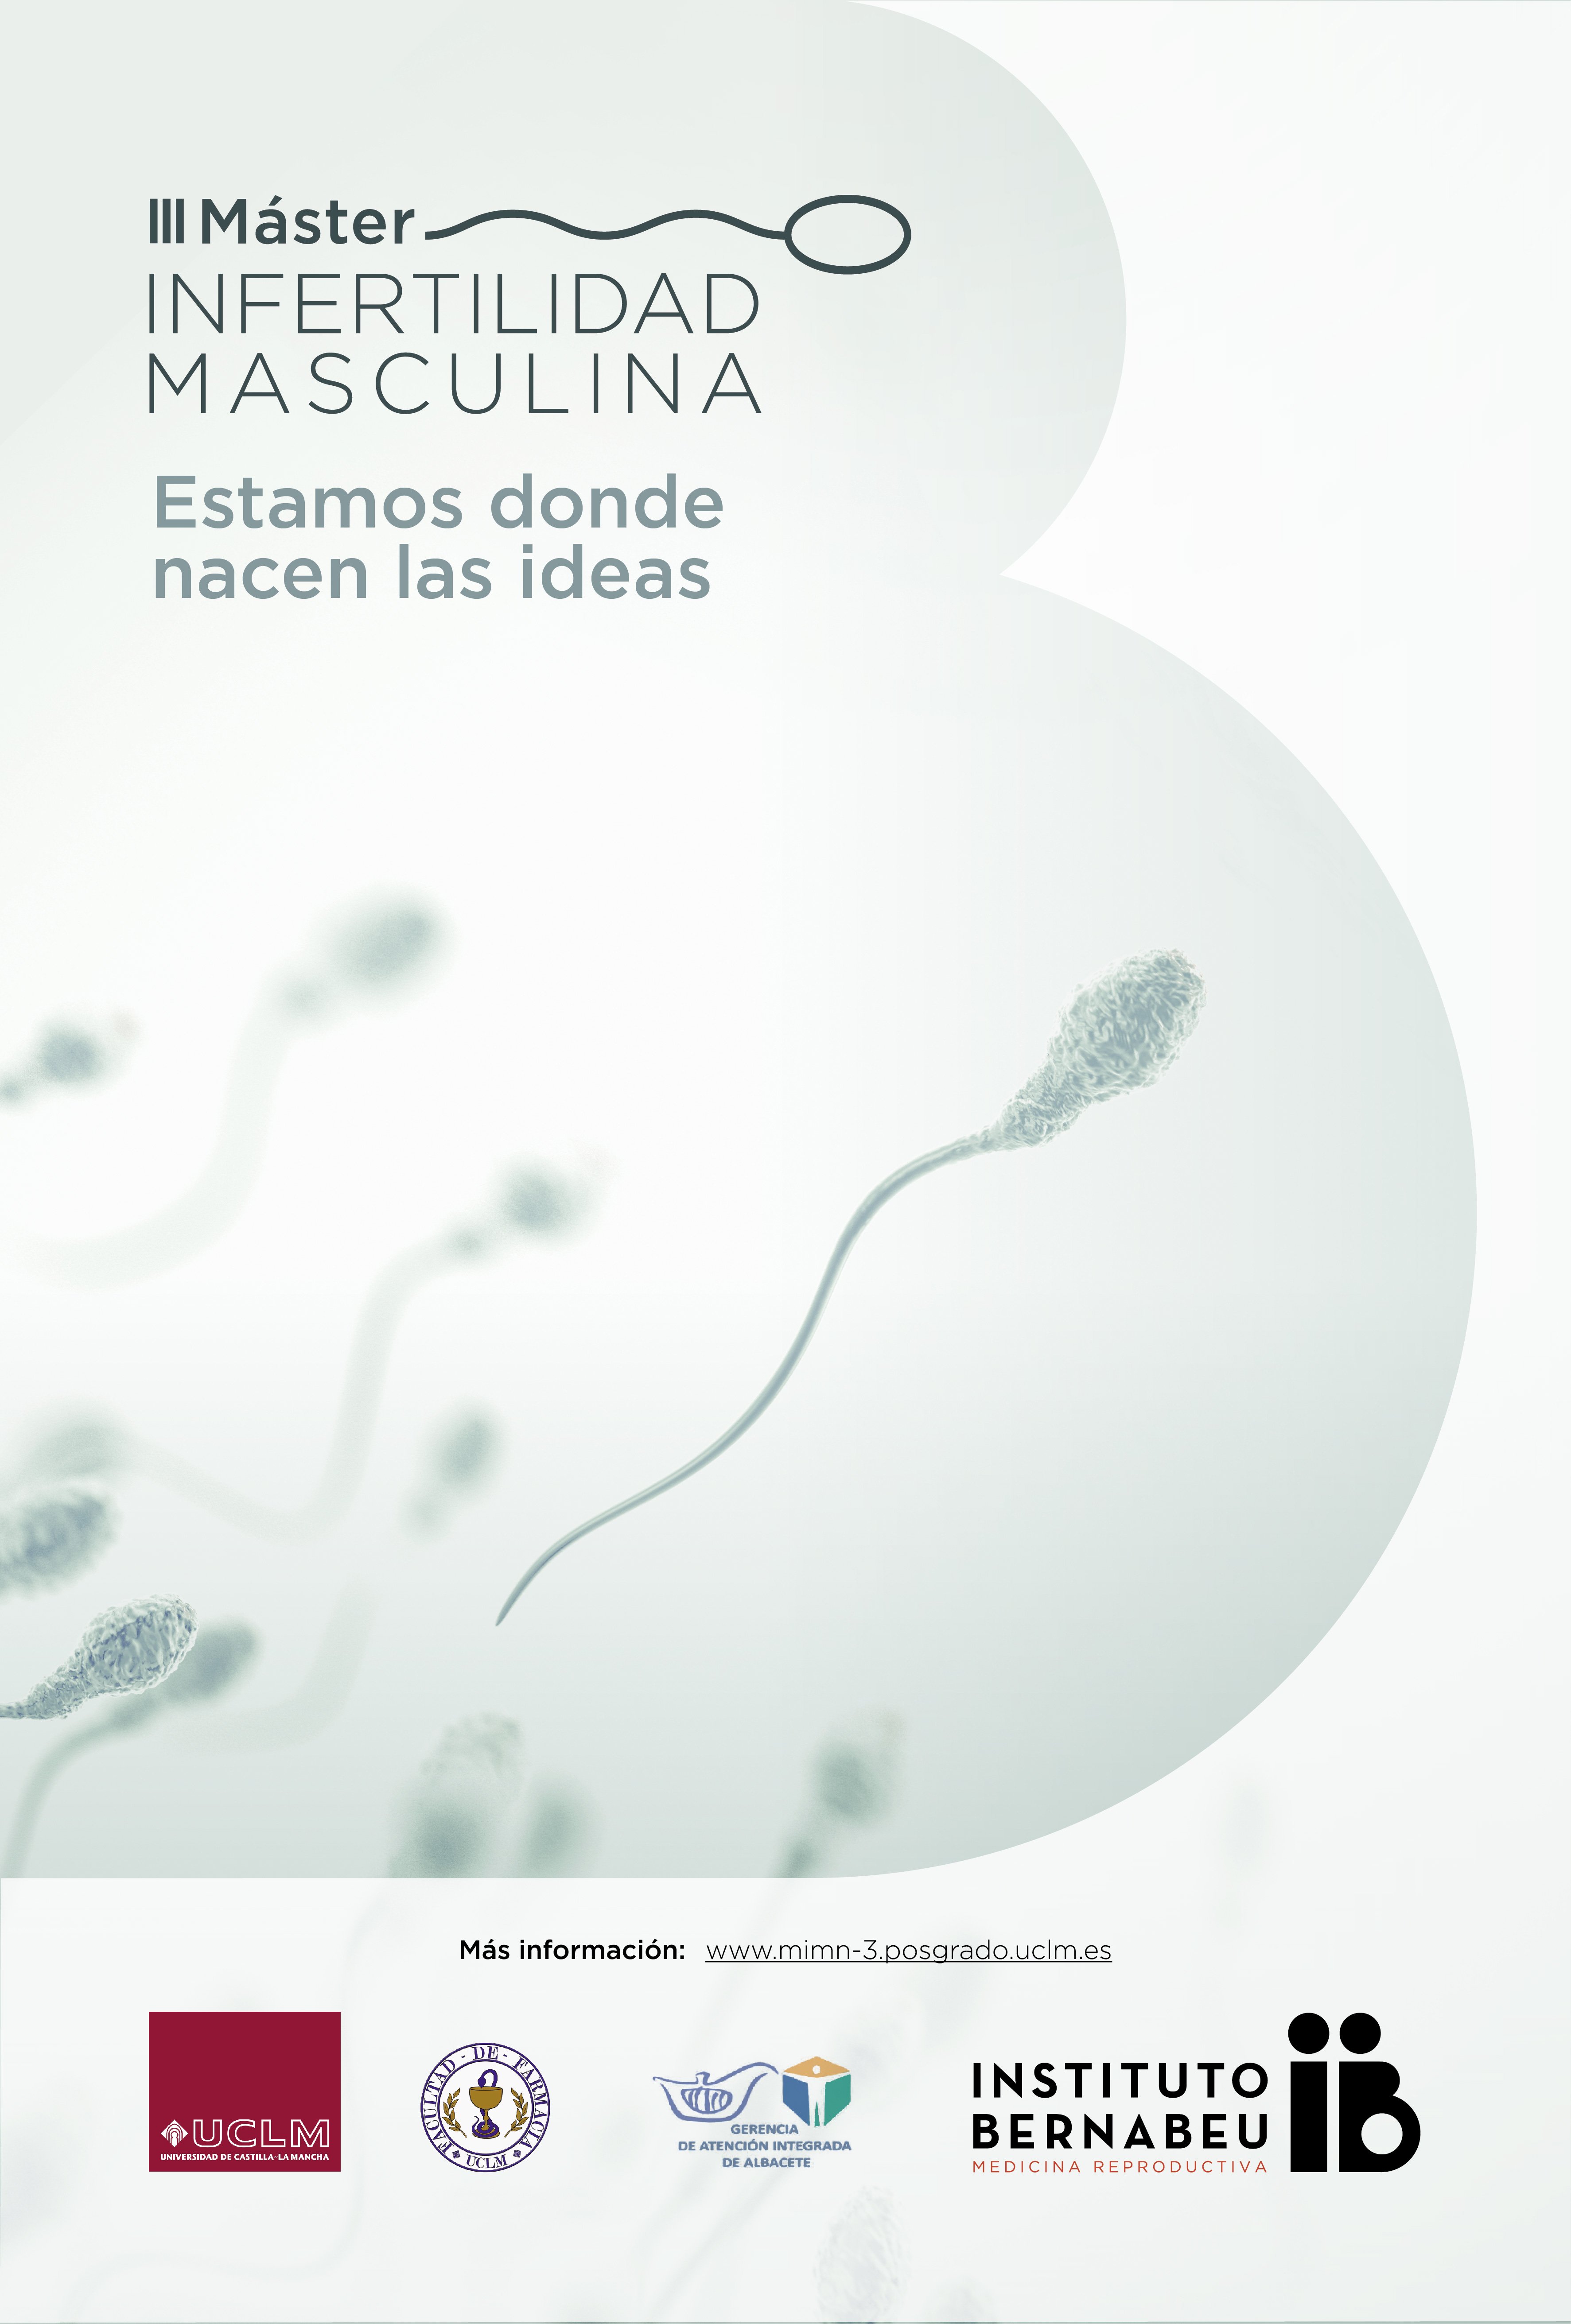 III Máster en infertilidad masculina Universidad de Castilla-La Mancha – Instituto Bernabeu